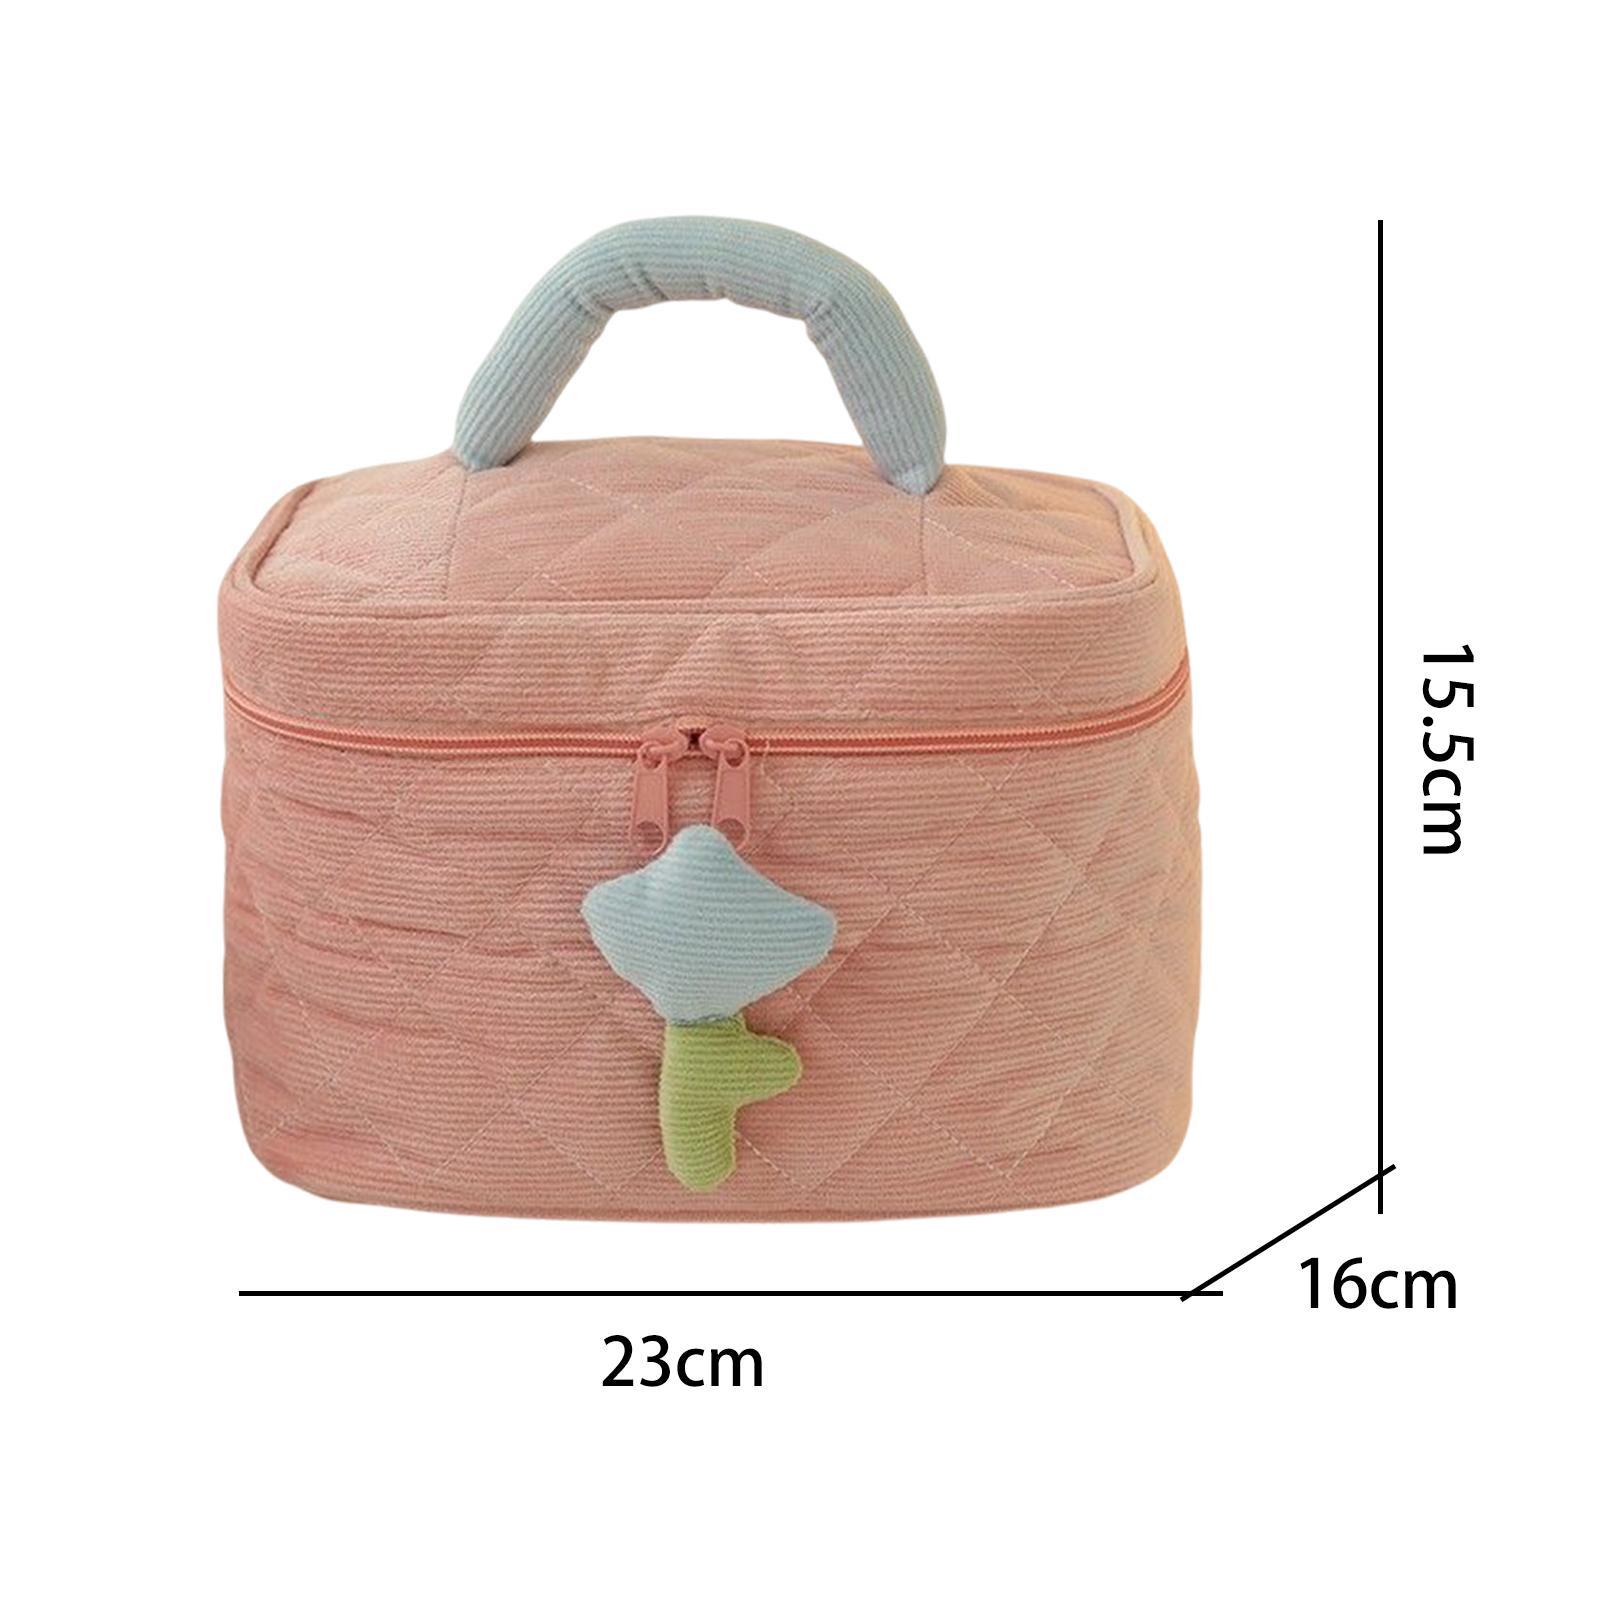 Large Capacity Travel Makeup Bag, Make Up Bag Portable Cosmetic Bag,Corduroy Toiletry Bag Travel Pouch,Organizer Bag for Women Girls